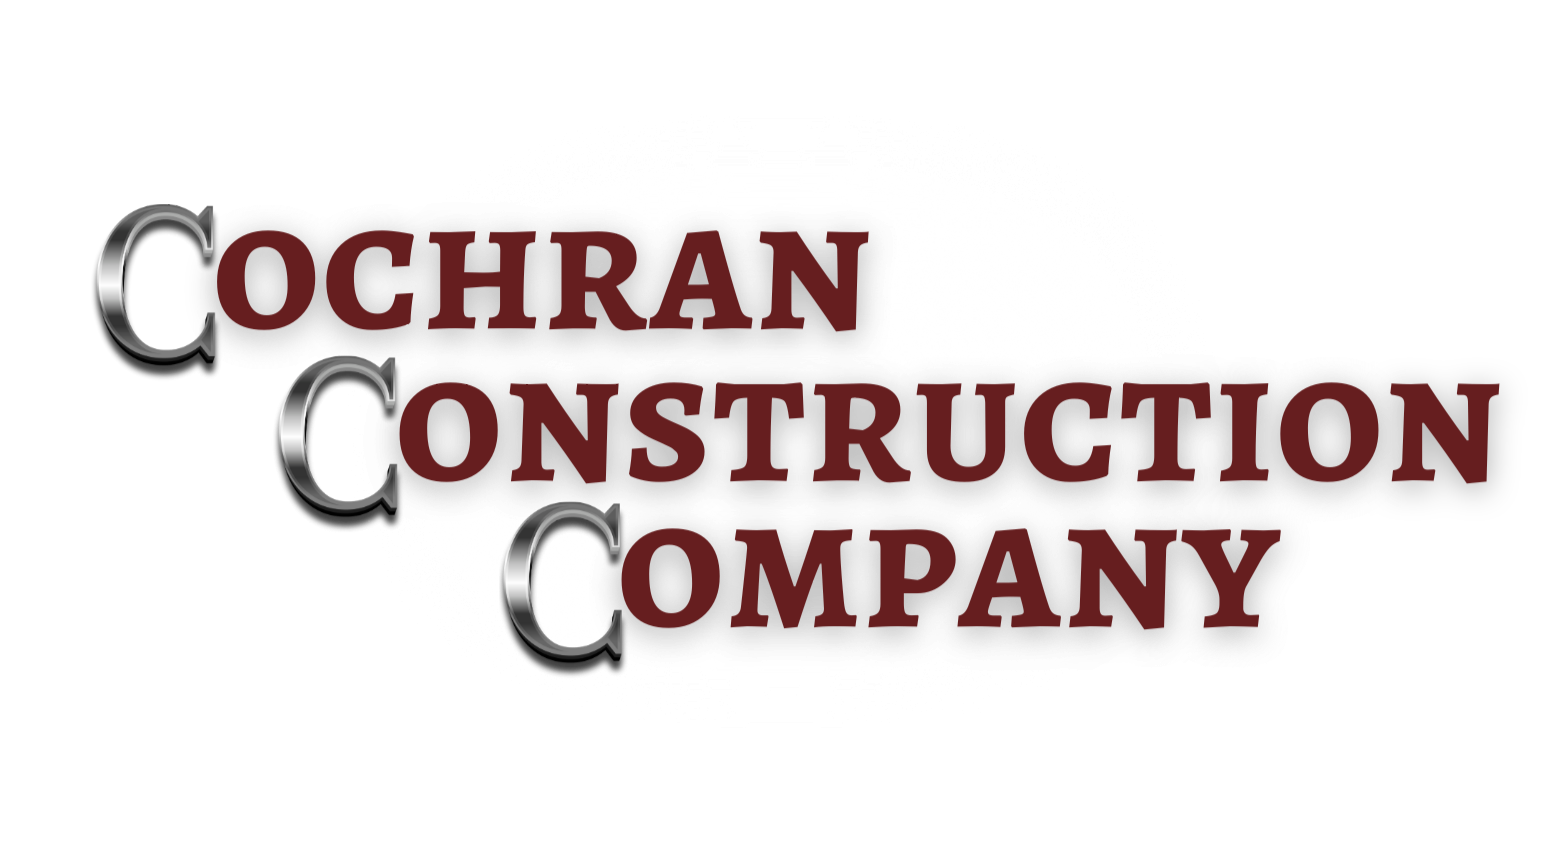 Cochran Construction Company